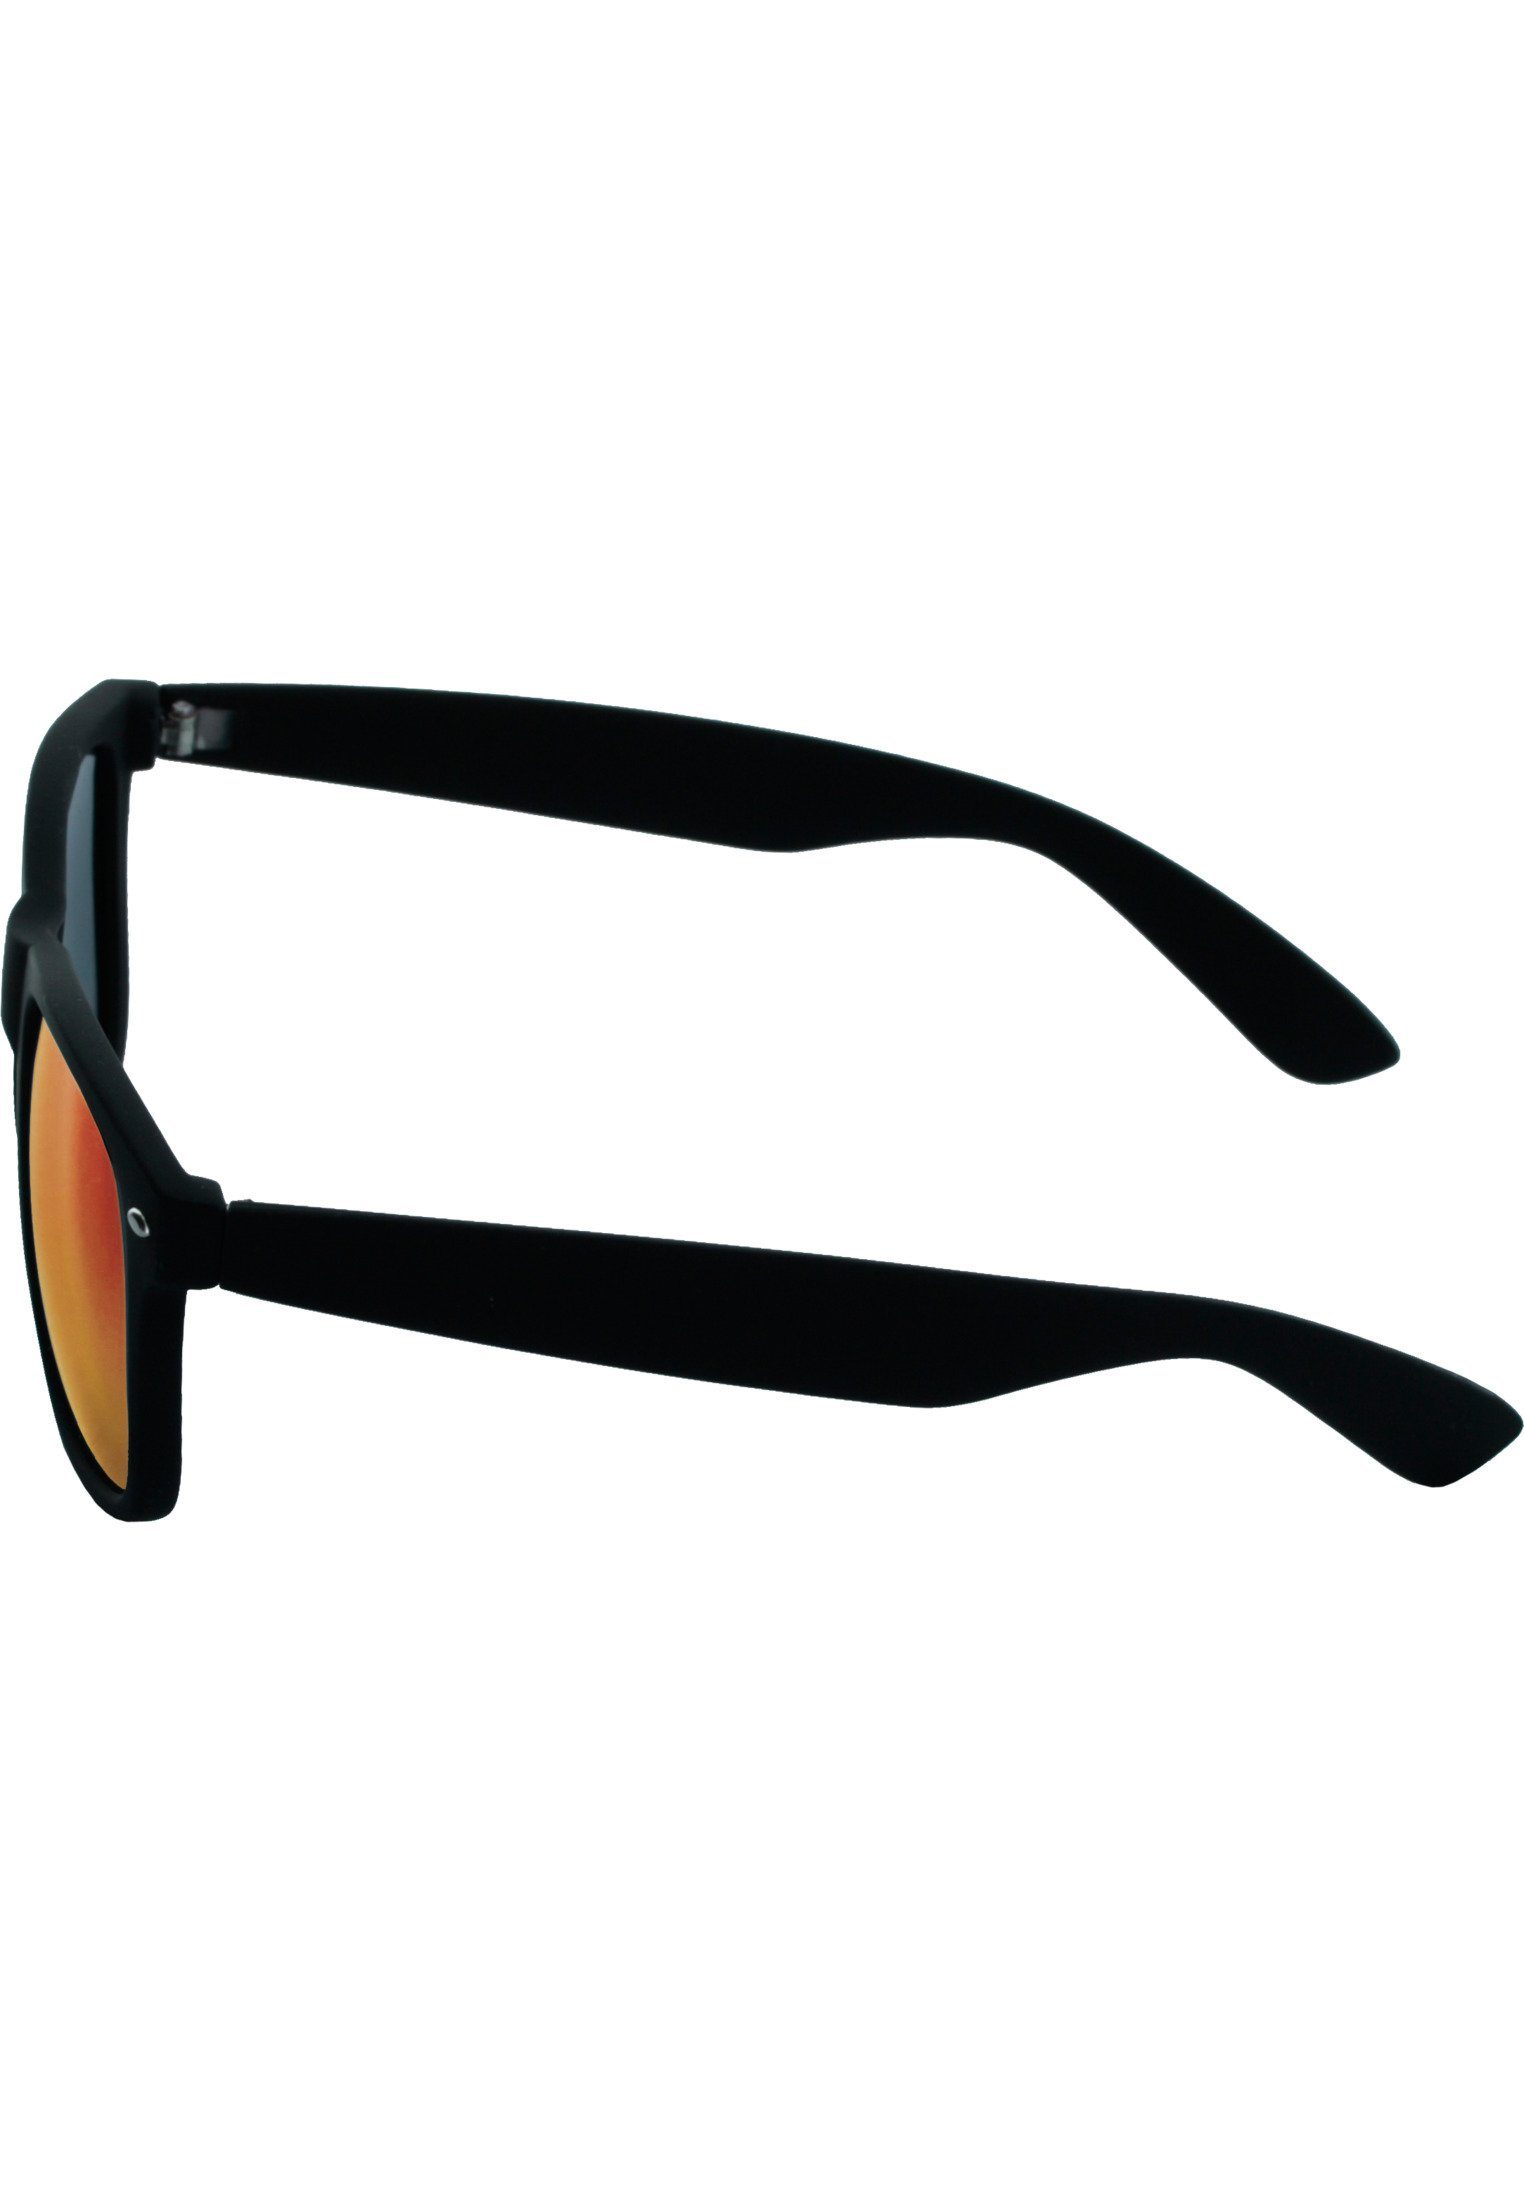 Accessoires Sunglasses MSTRDS Mirror Likoma Sonnenbrille blk/orange